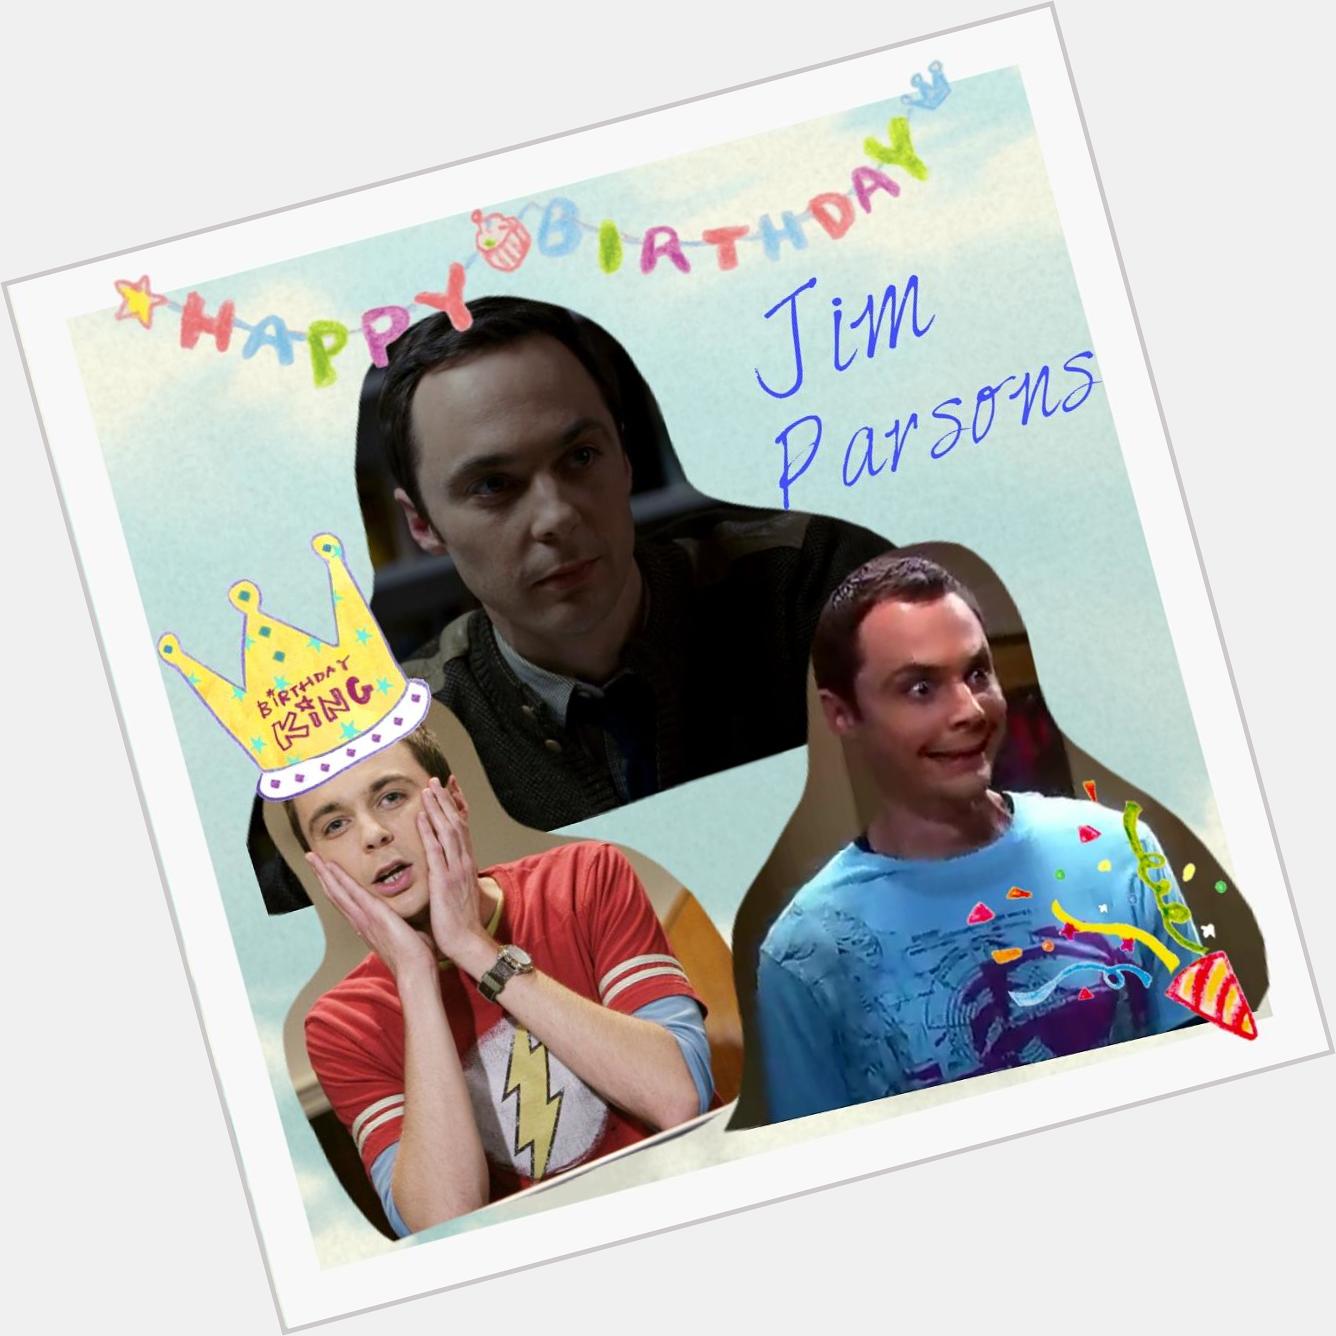 Happy birthday dear Jim Parsons!!!!! 